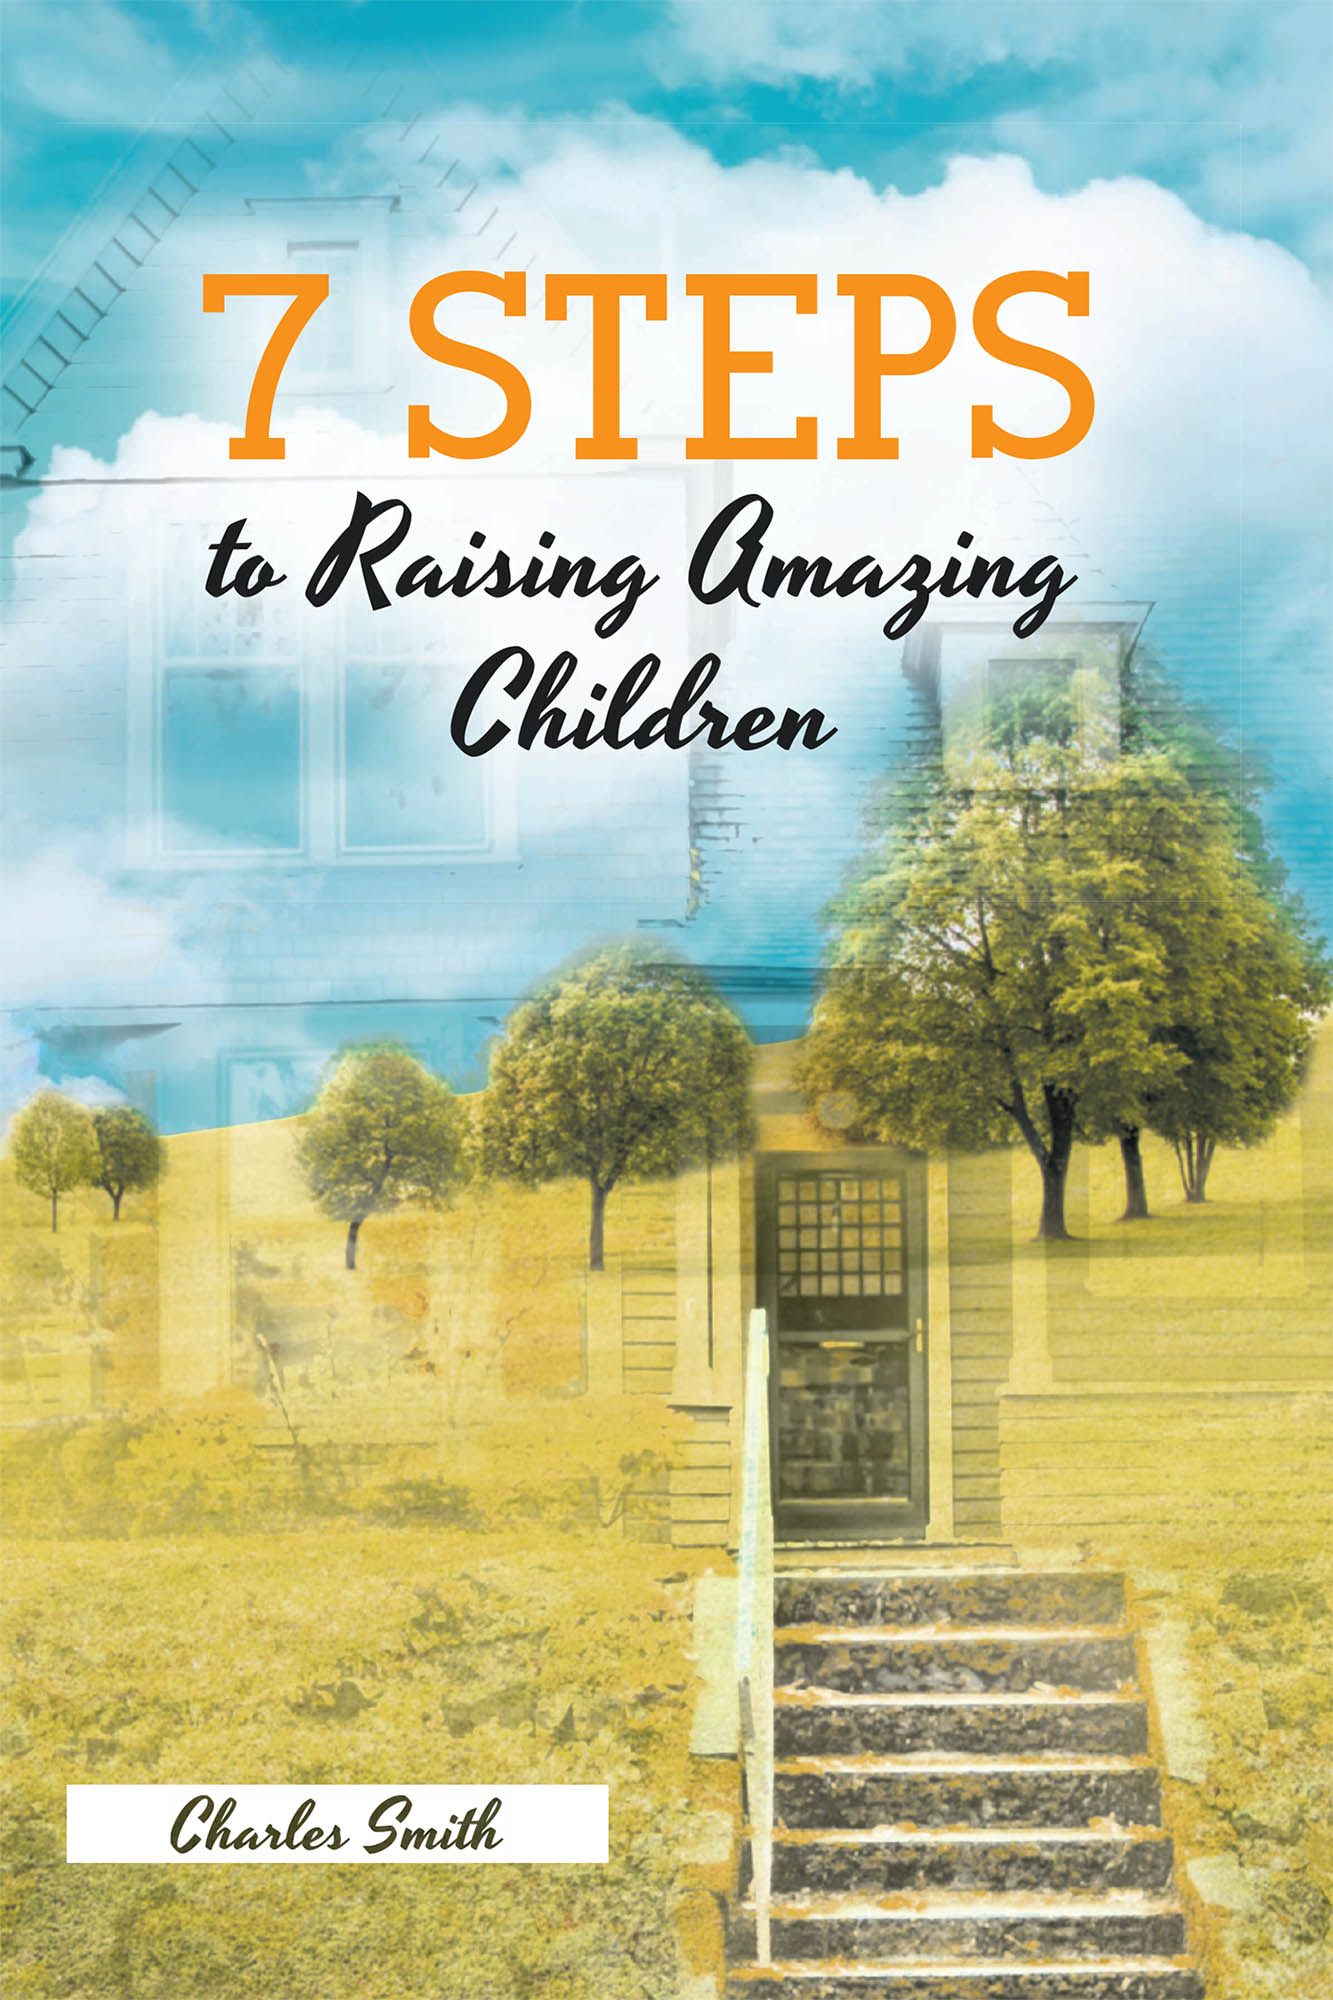 7 Steps to Raising Amazing Children Cover Image